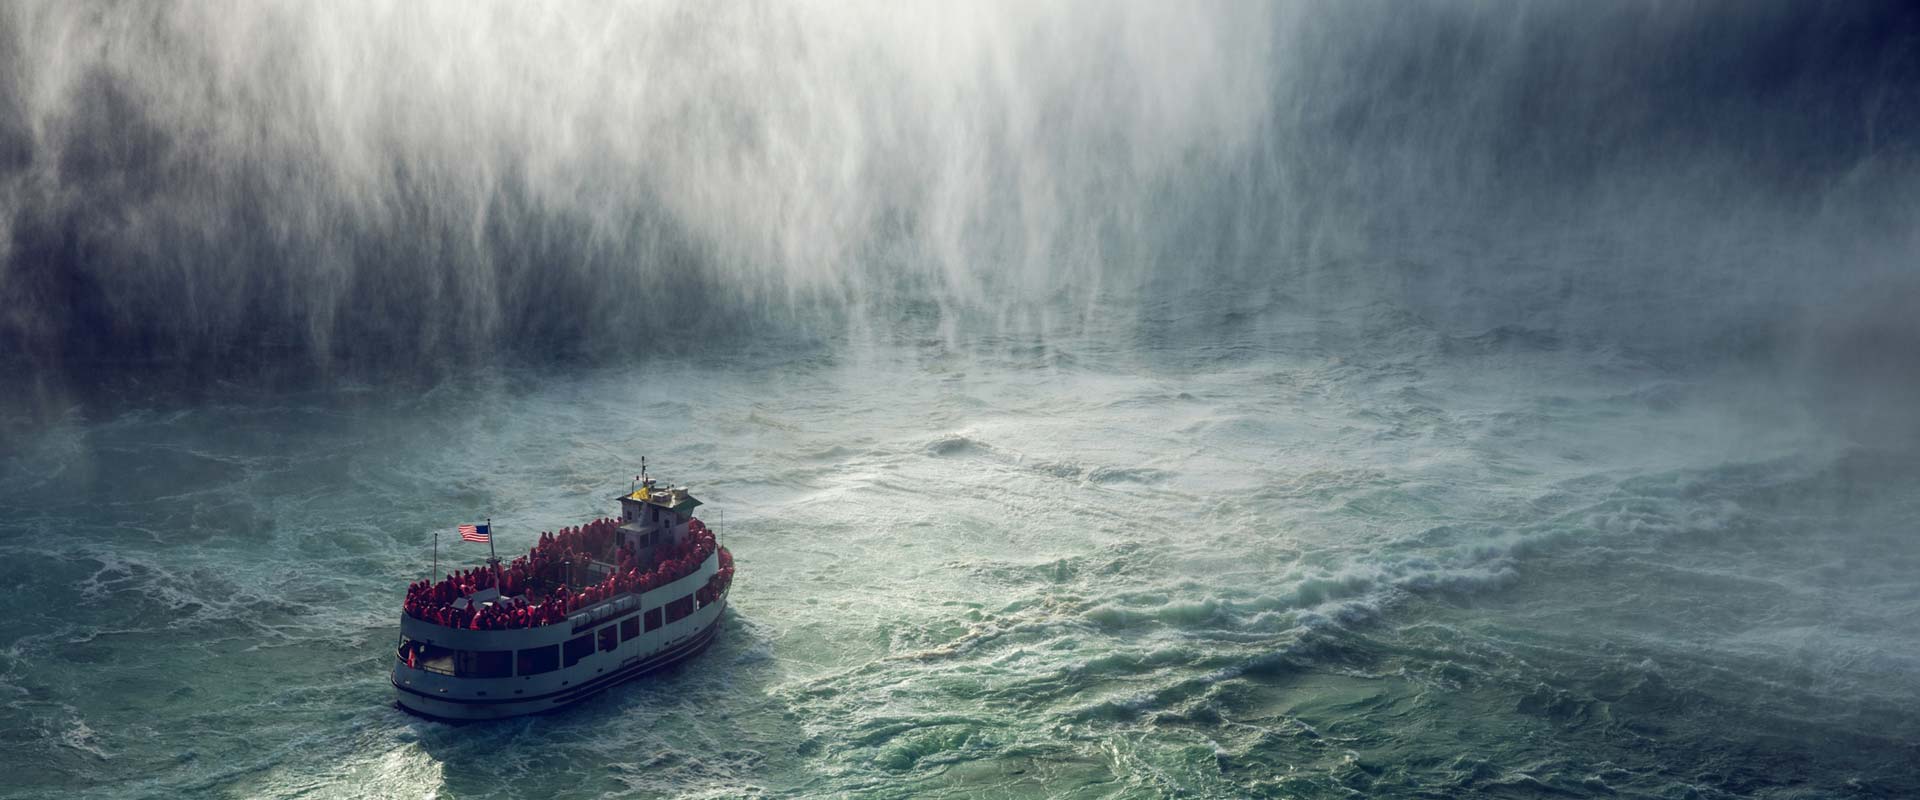 Hornblower – Canada Side Niagara Falls Boat Tour